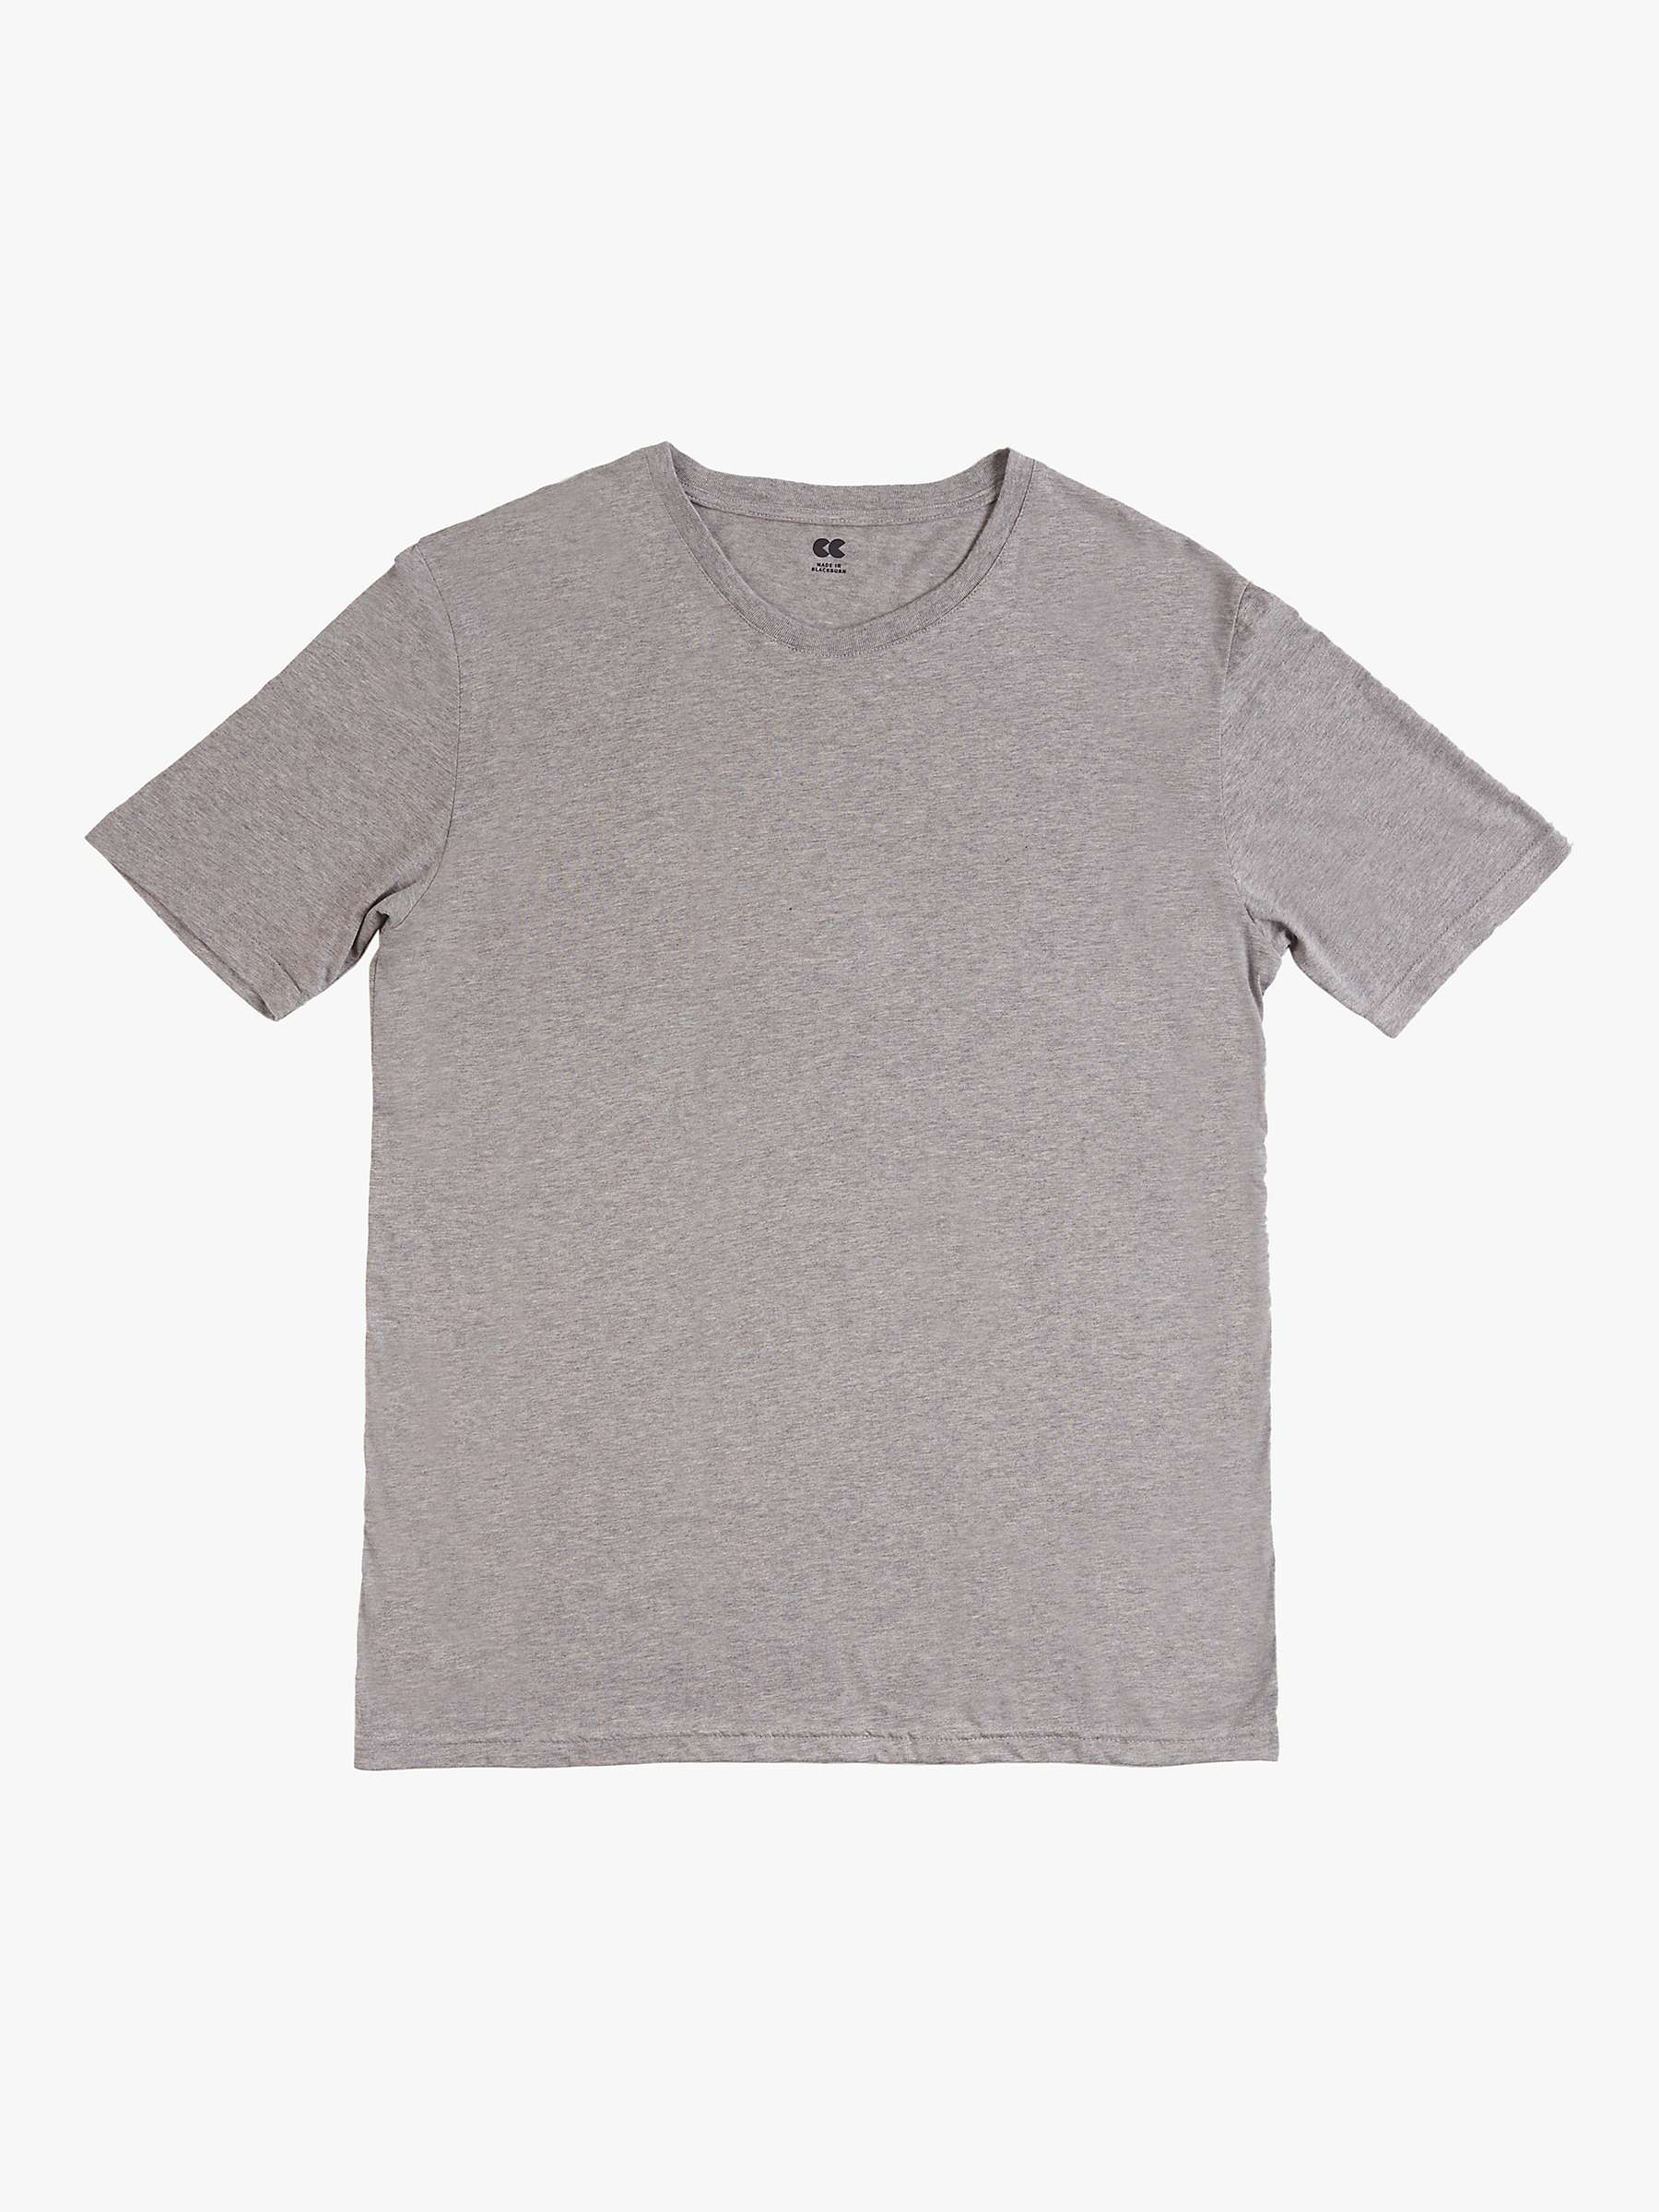 Buy Community Clothing Regular Fit Short Sleeve Cotton Shirt Online at johnlewis.com